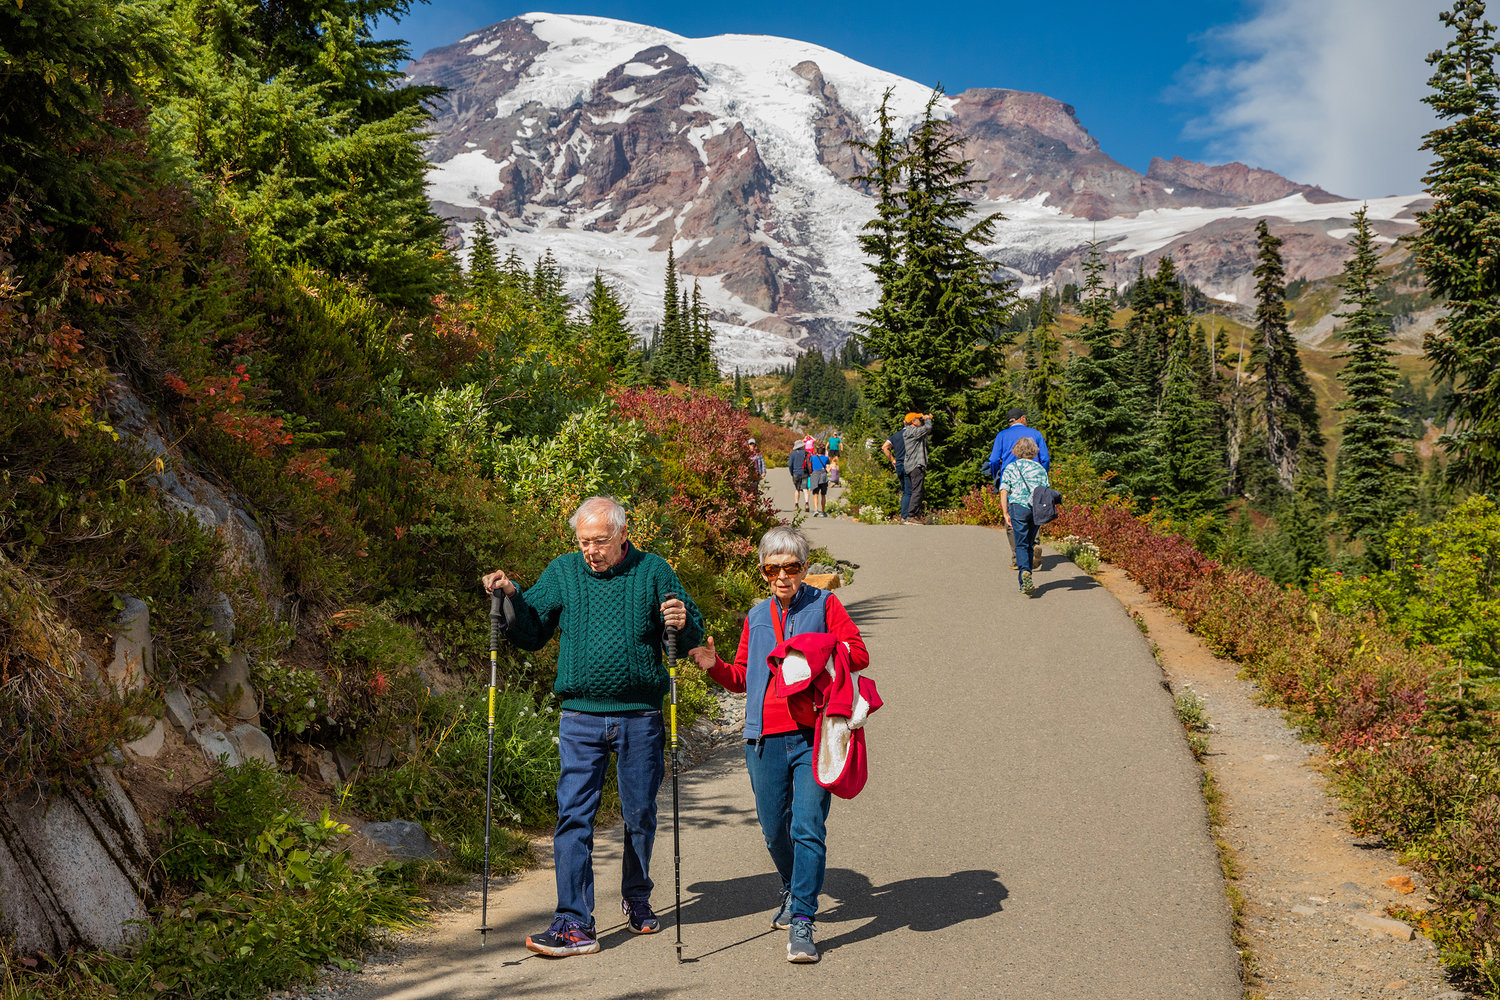 Visitors take in views of Mount Rainier while walking along paths through Paradise on Wednesday near Ashford.